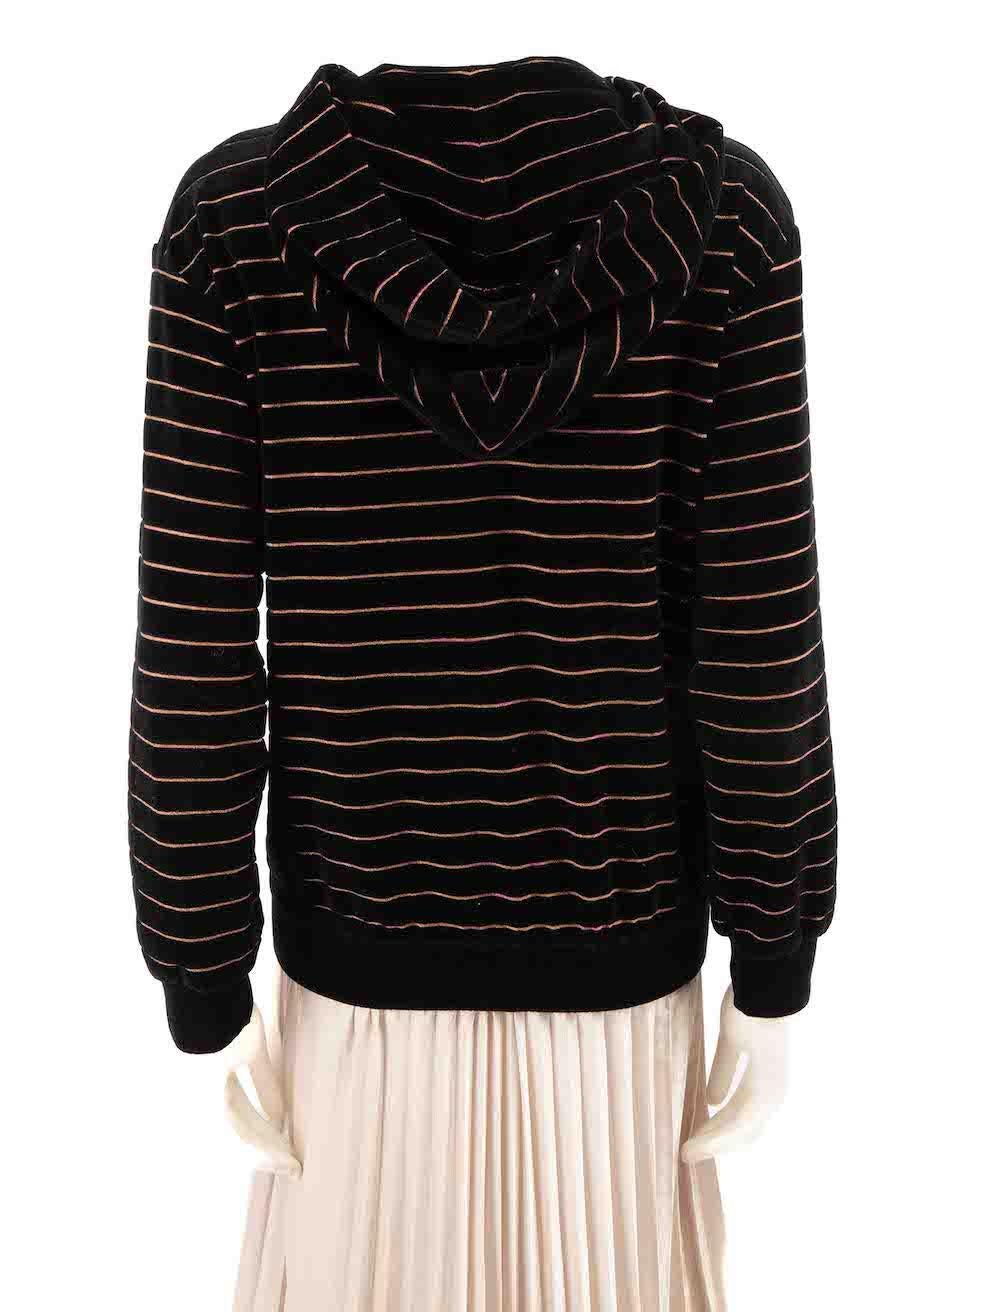 Sonia Rykiel Black Velvet Striped Zipped Jacket Size M In Good Condition For Sale In London, GB